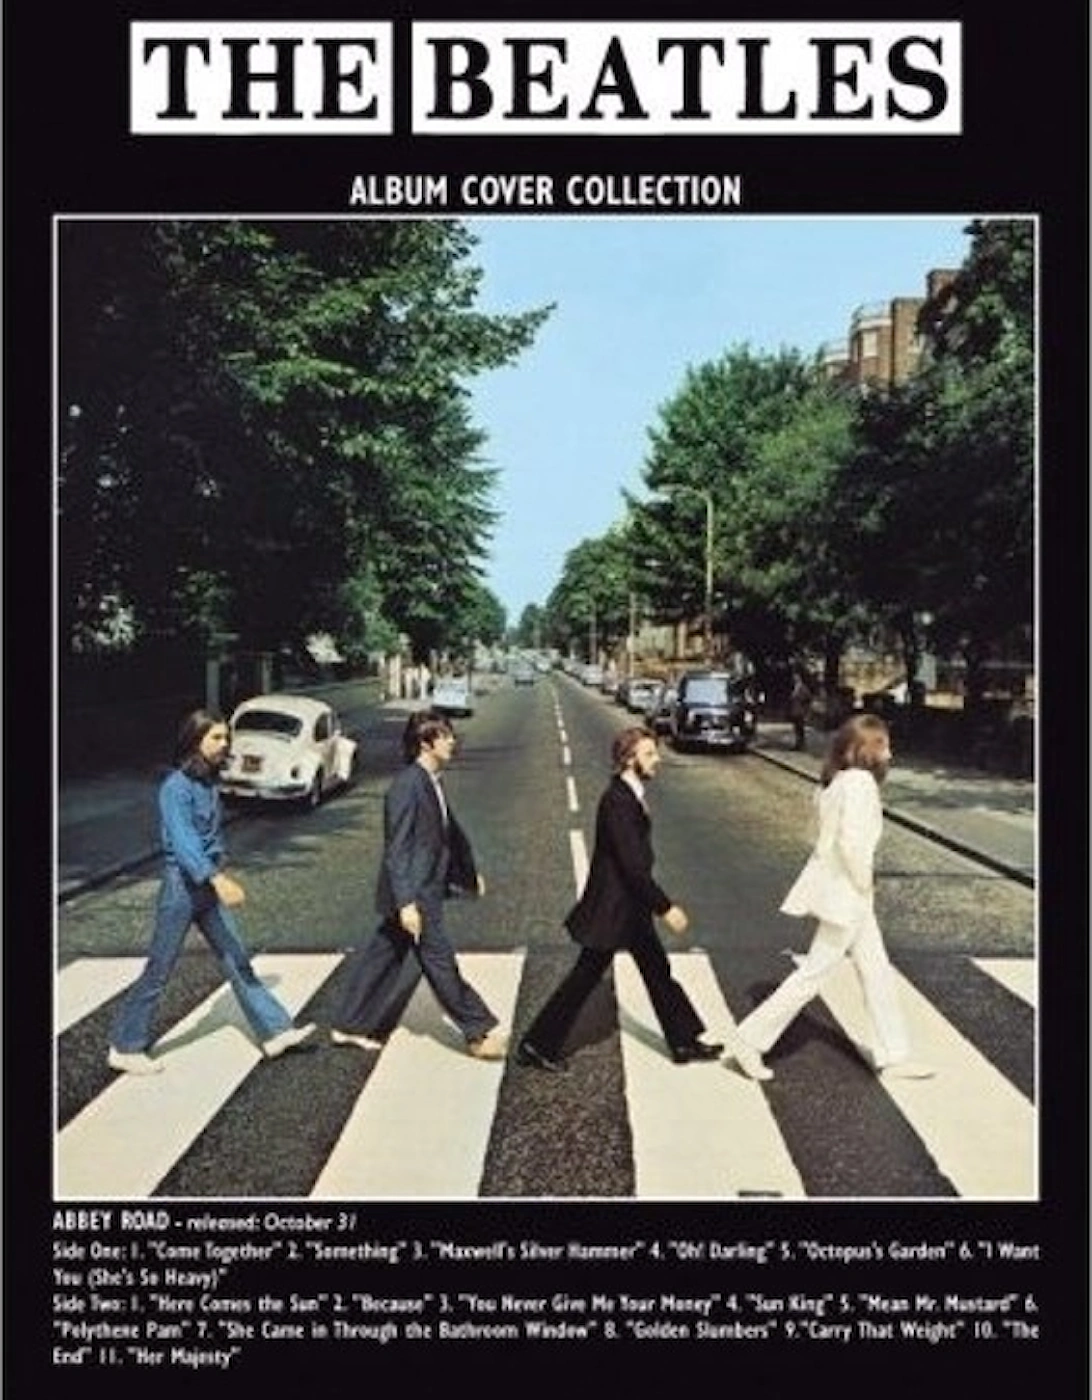 Abbey Road Postcard, 2 of 1